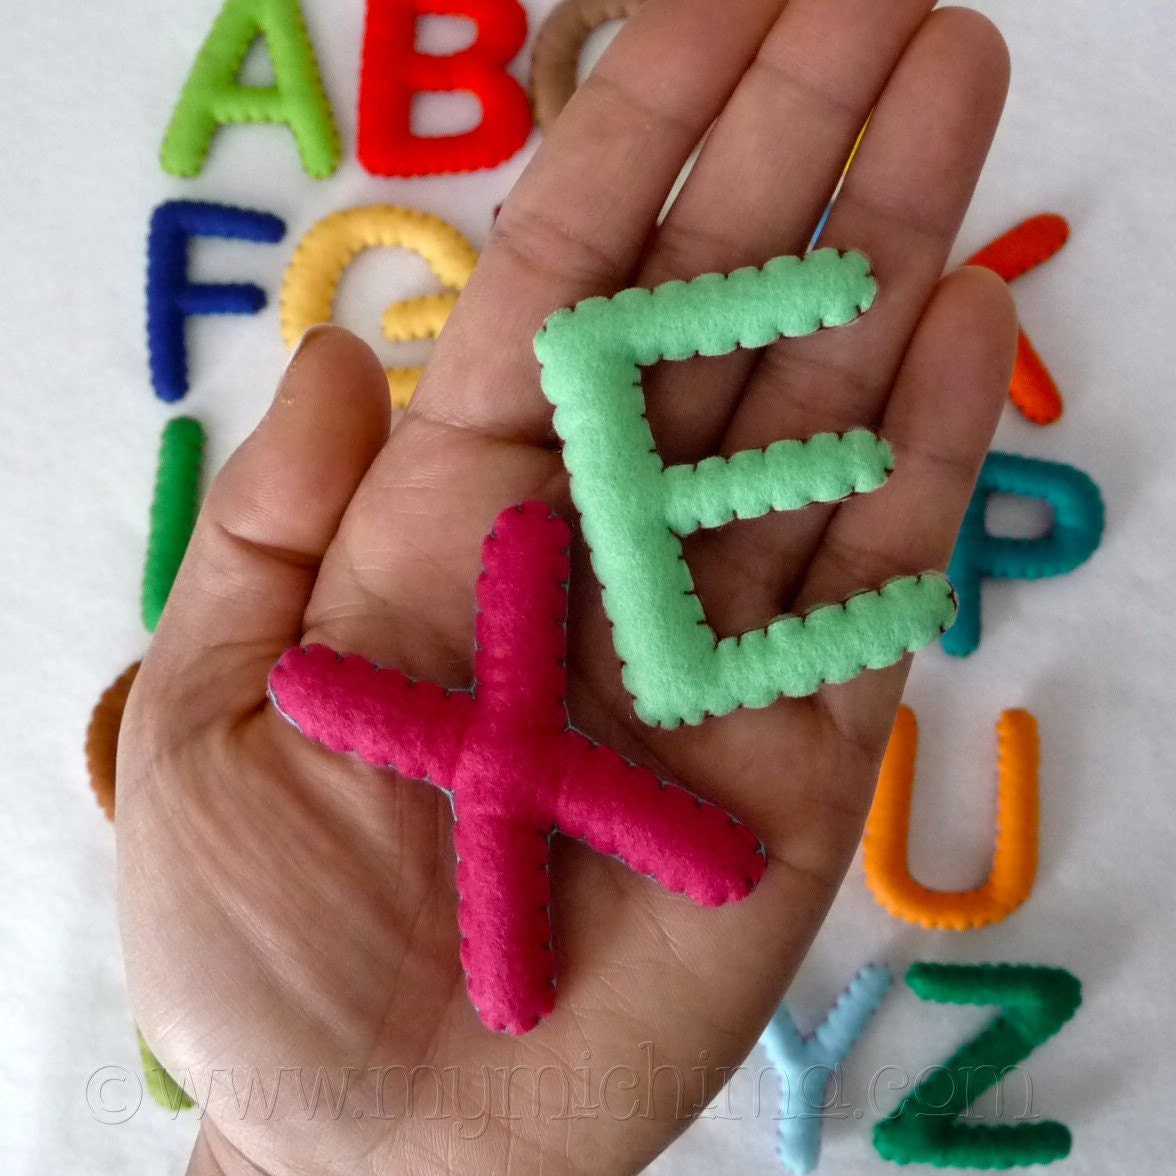 Stuffed Felt Alphabet Letter Set in a Reusable Drawstring Bag - Upper Case Set - 2 inch